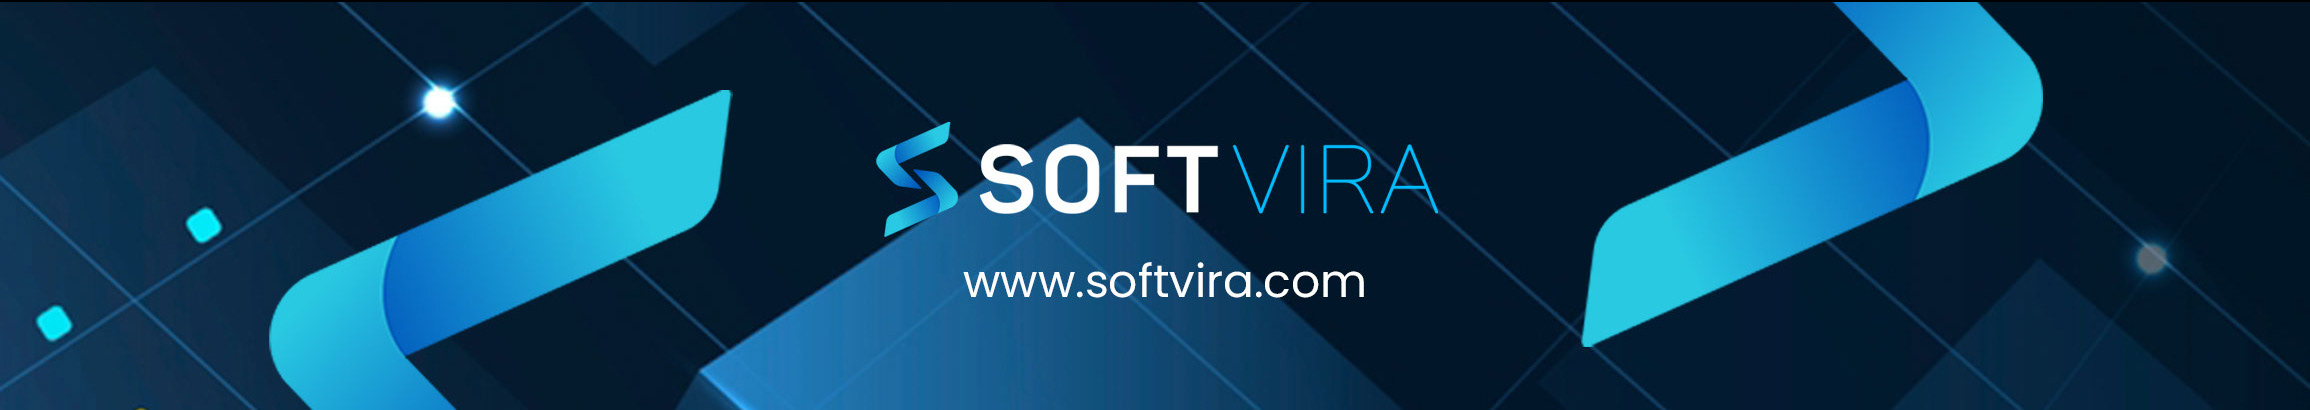 Softvira Global's profile banner